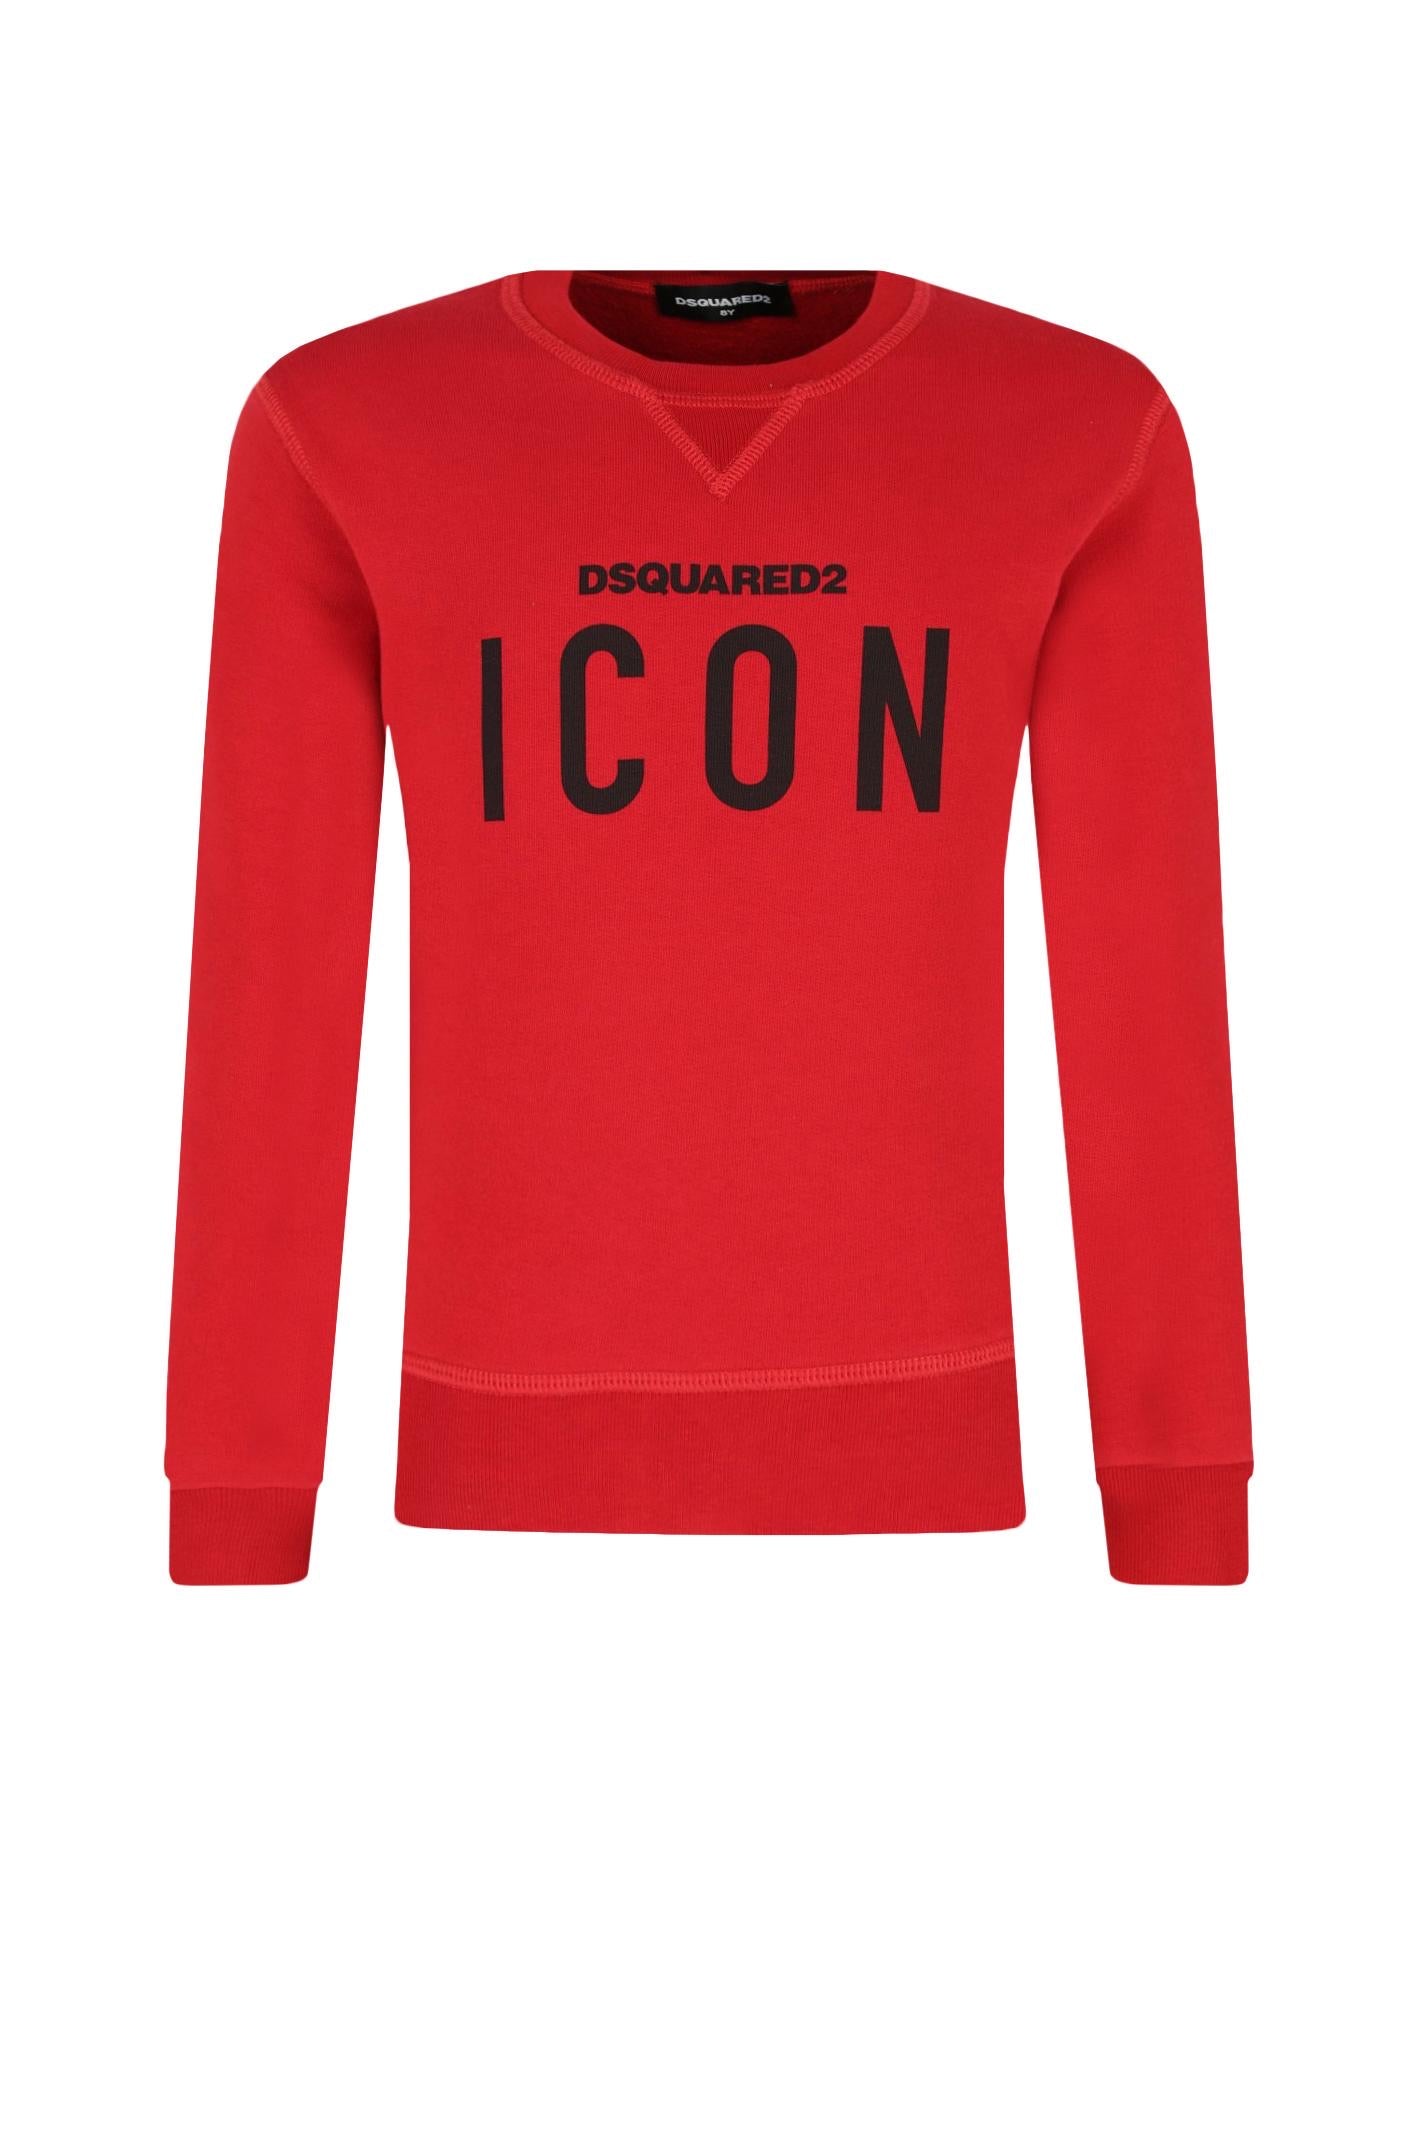 dsquared icon sweatshirt red